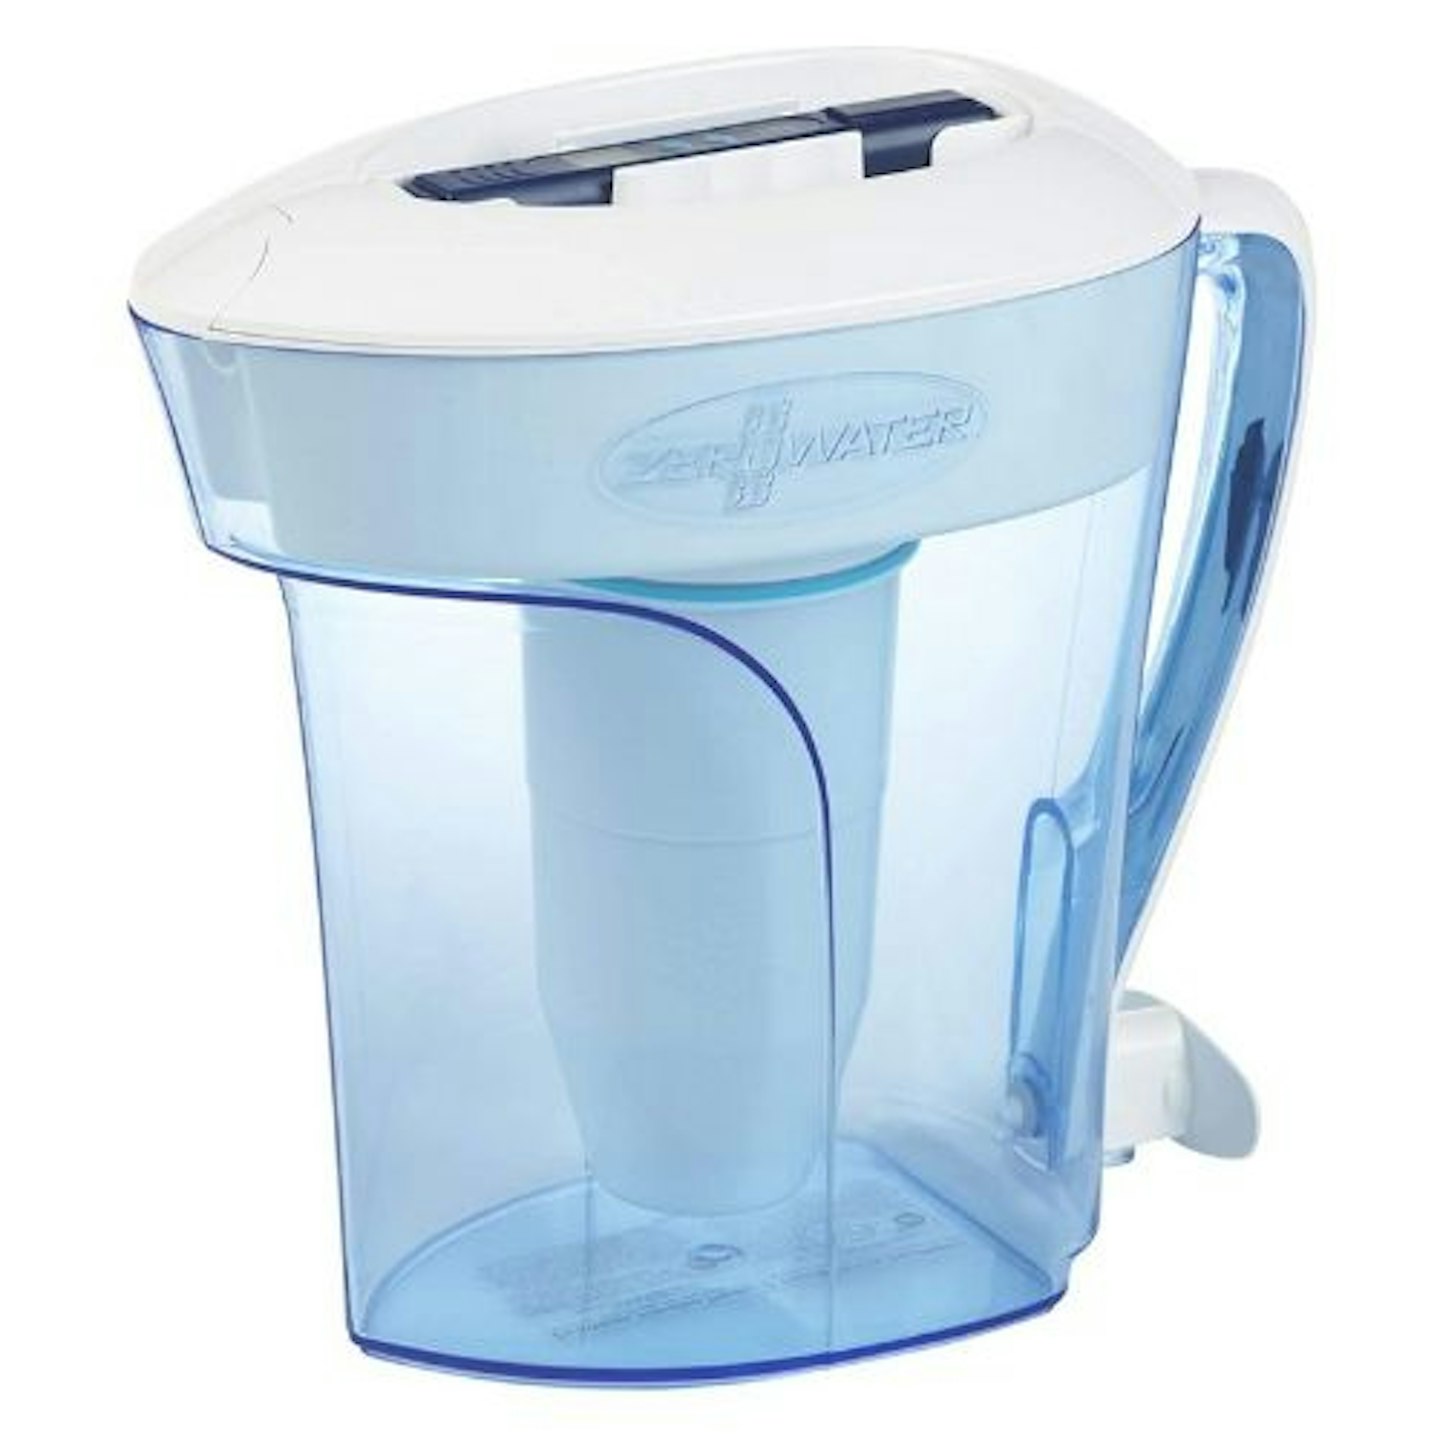 ZeroWater 10 Cup Water Filter Jug